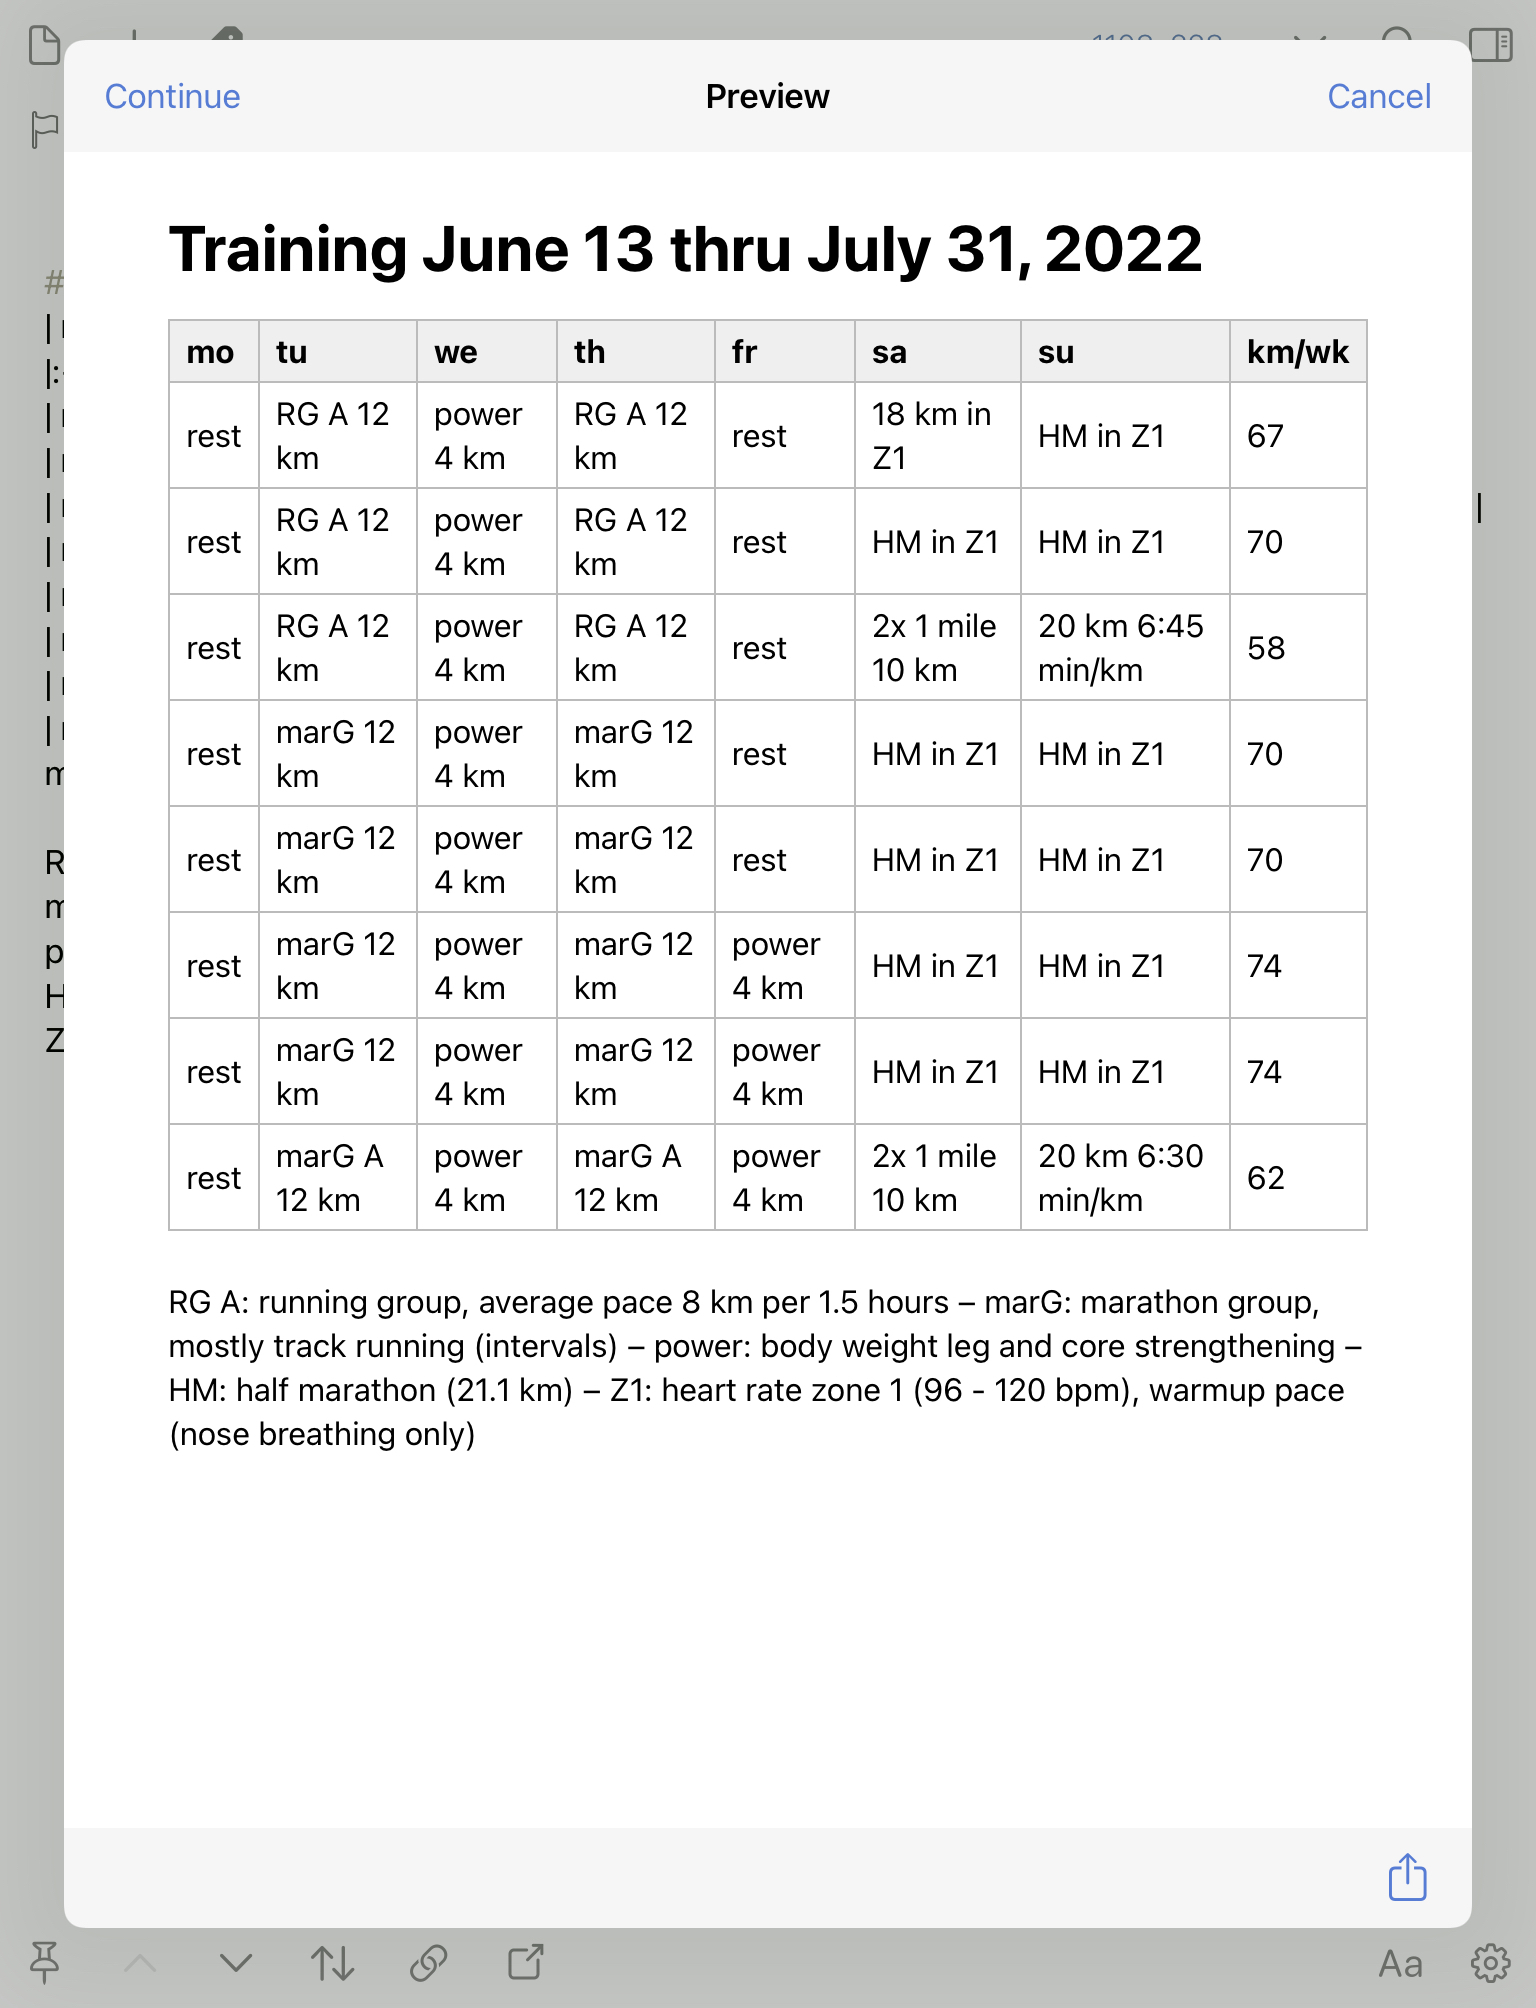 training schedule June 13 - July 31, 2022